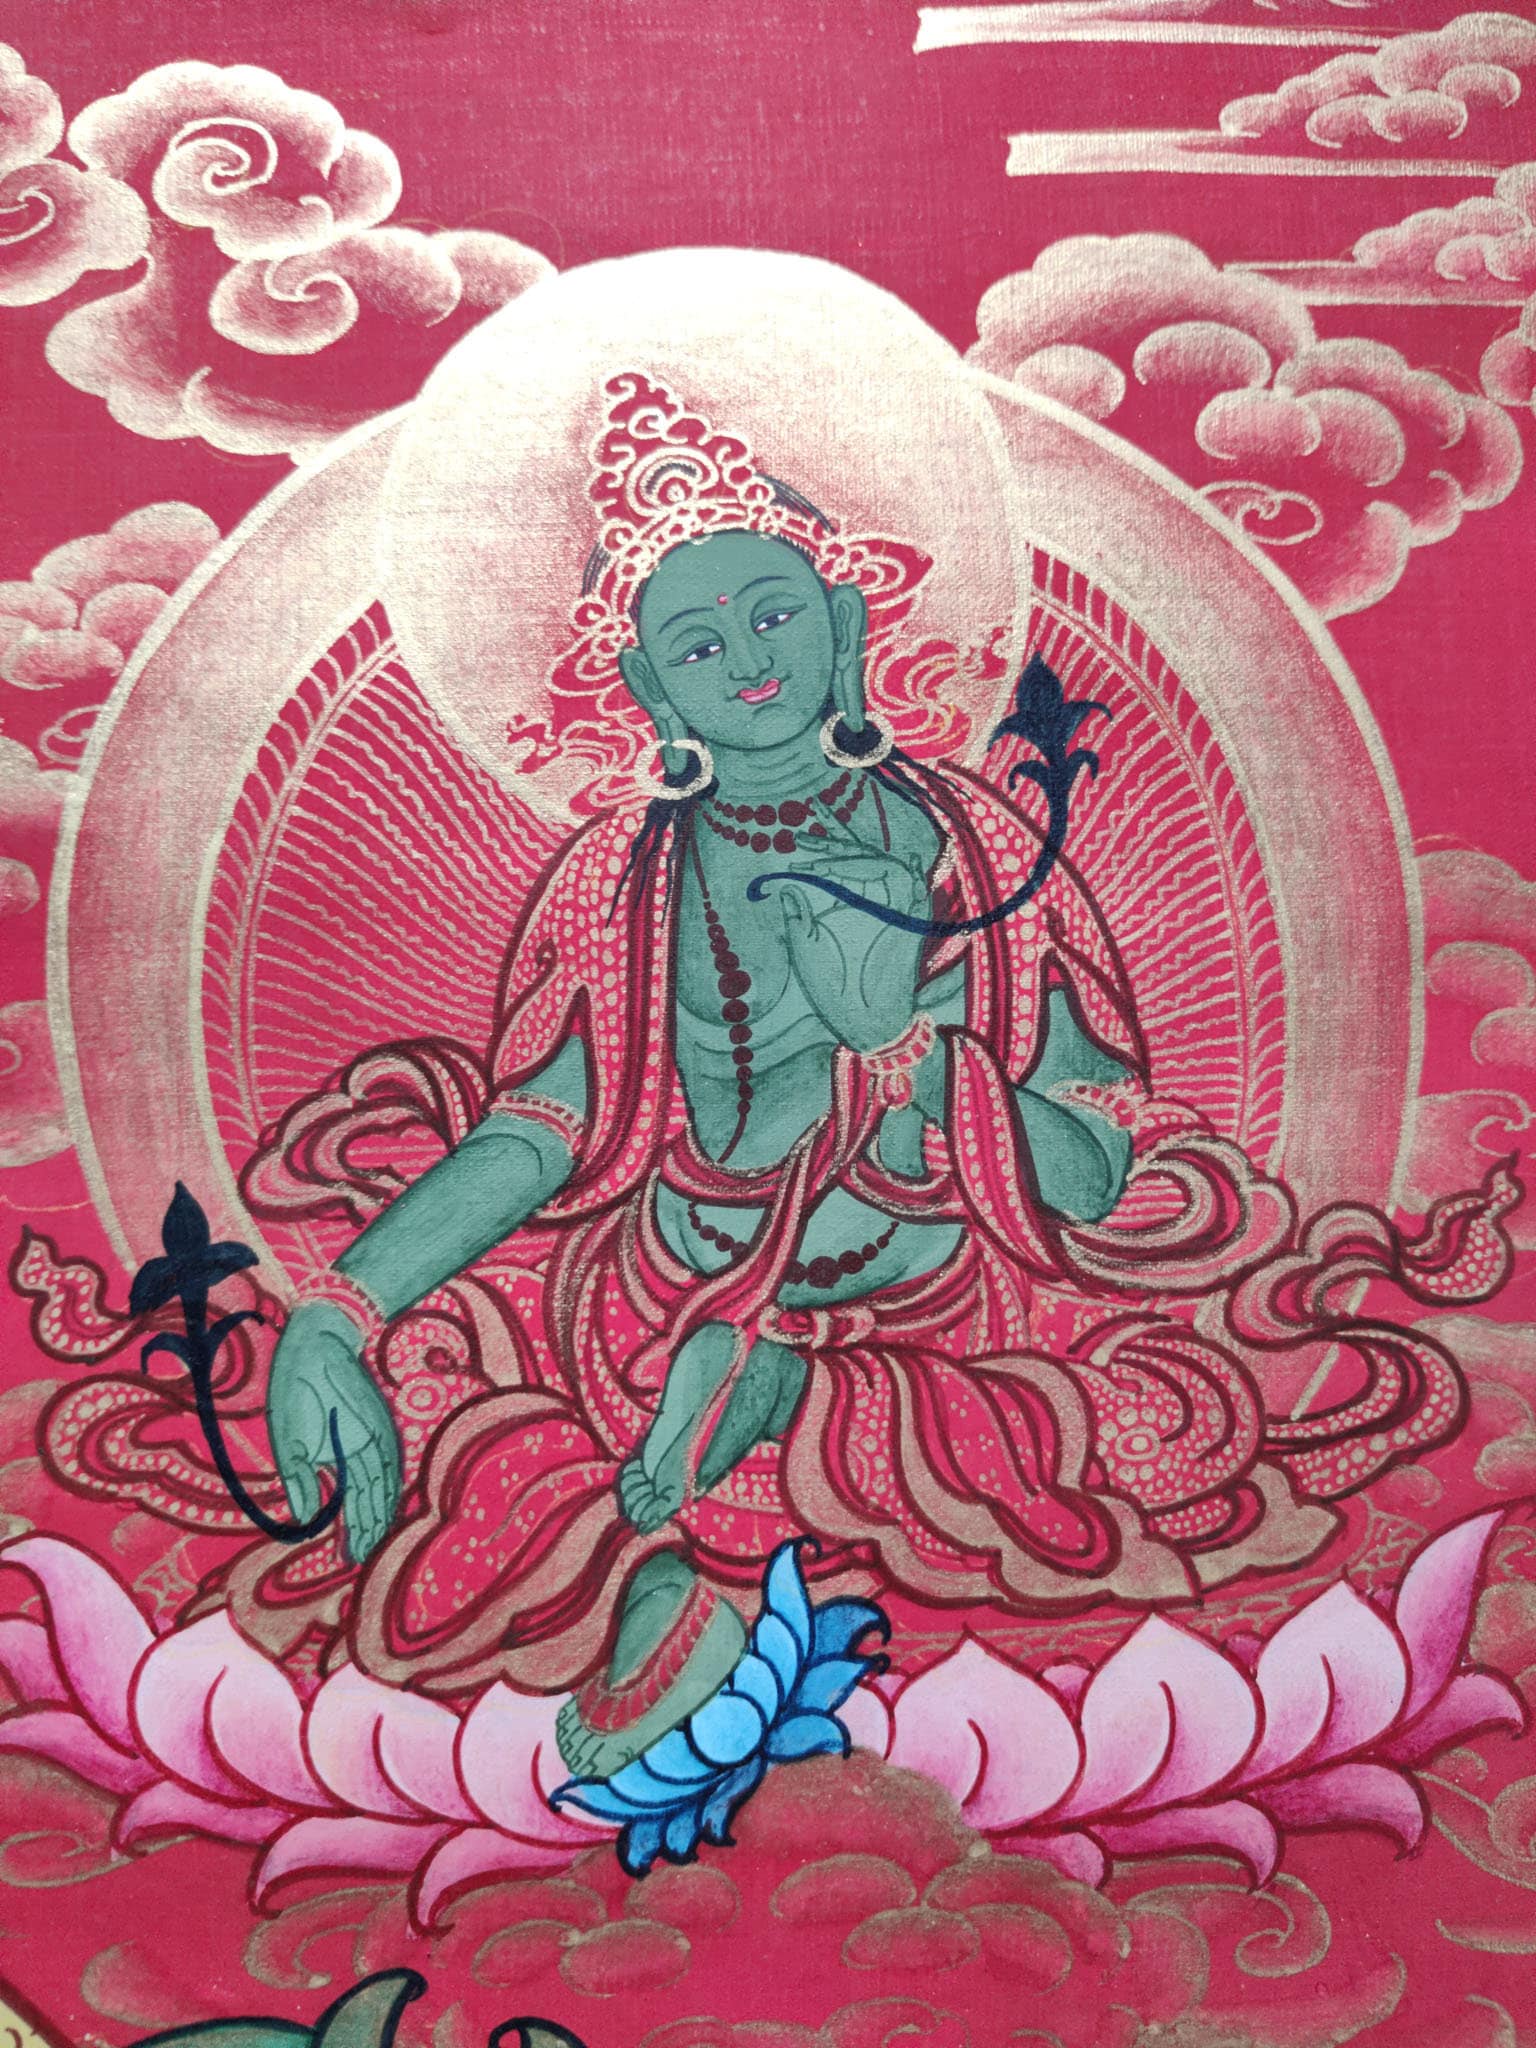 Master Quality Shakyamuni Buddha - Lucky Thanka